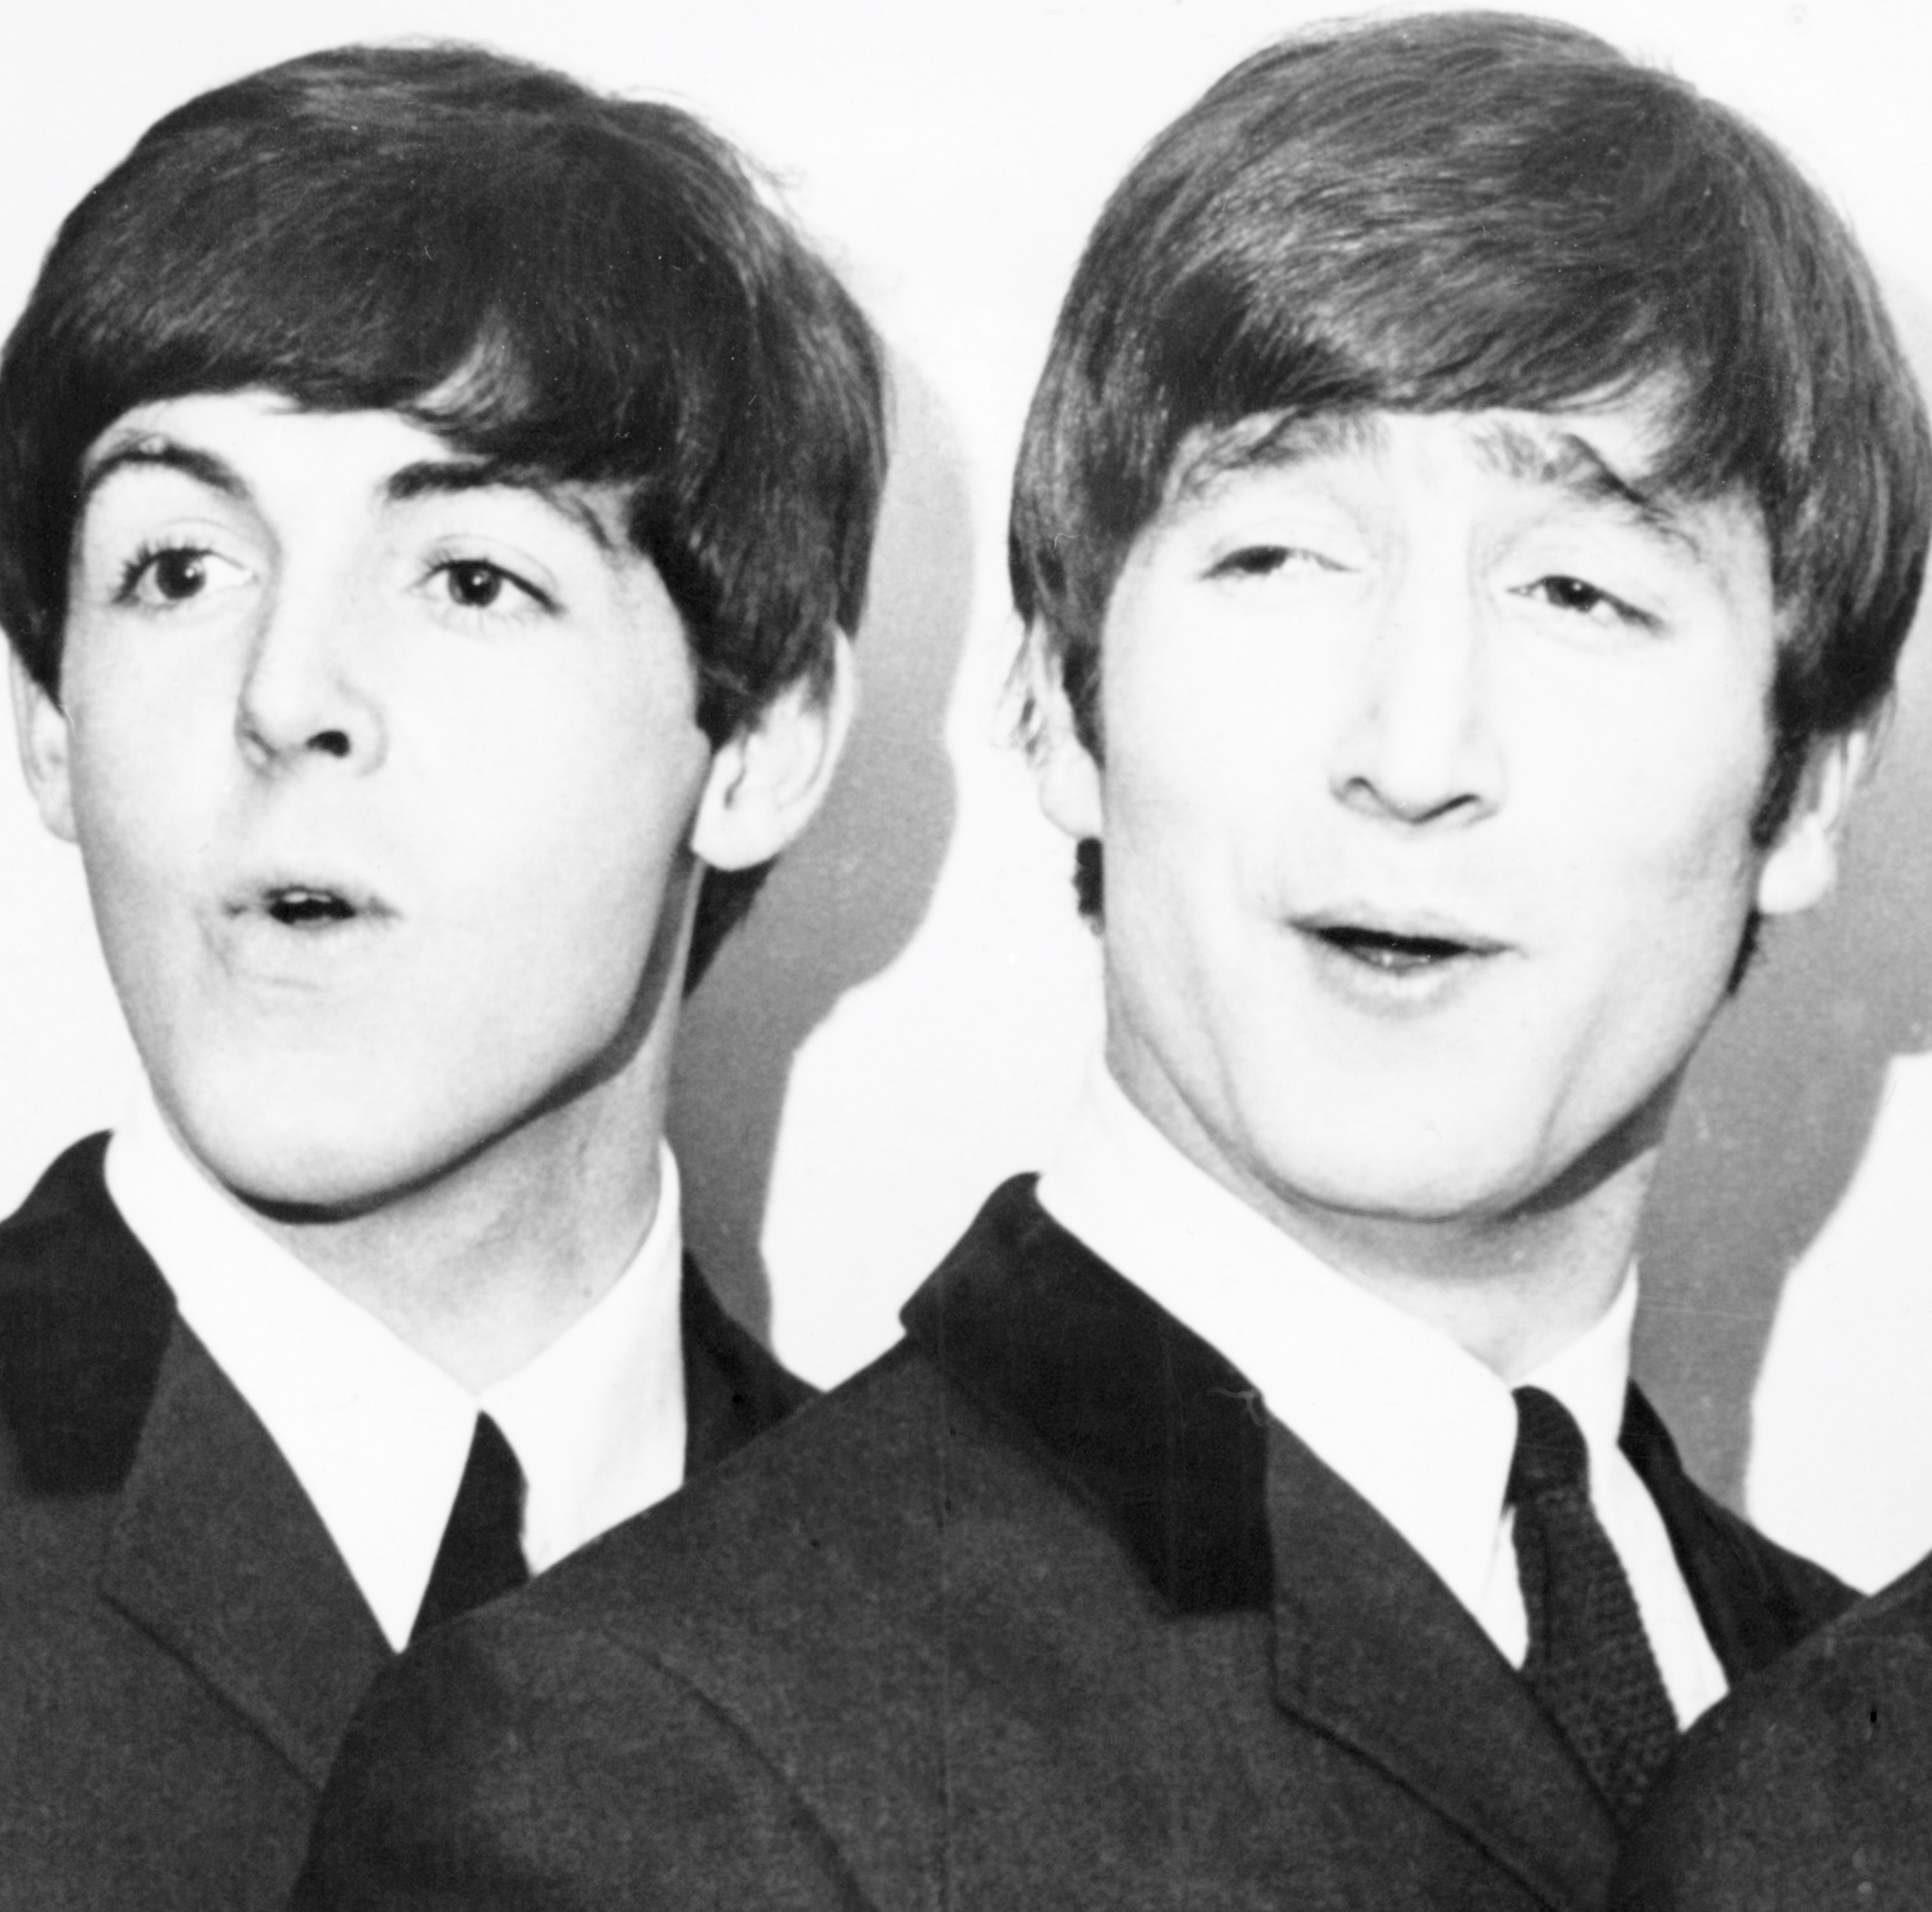 The Beatles' Paul McCartney and John Lennon wearing suits